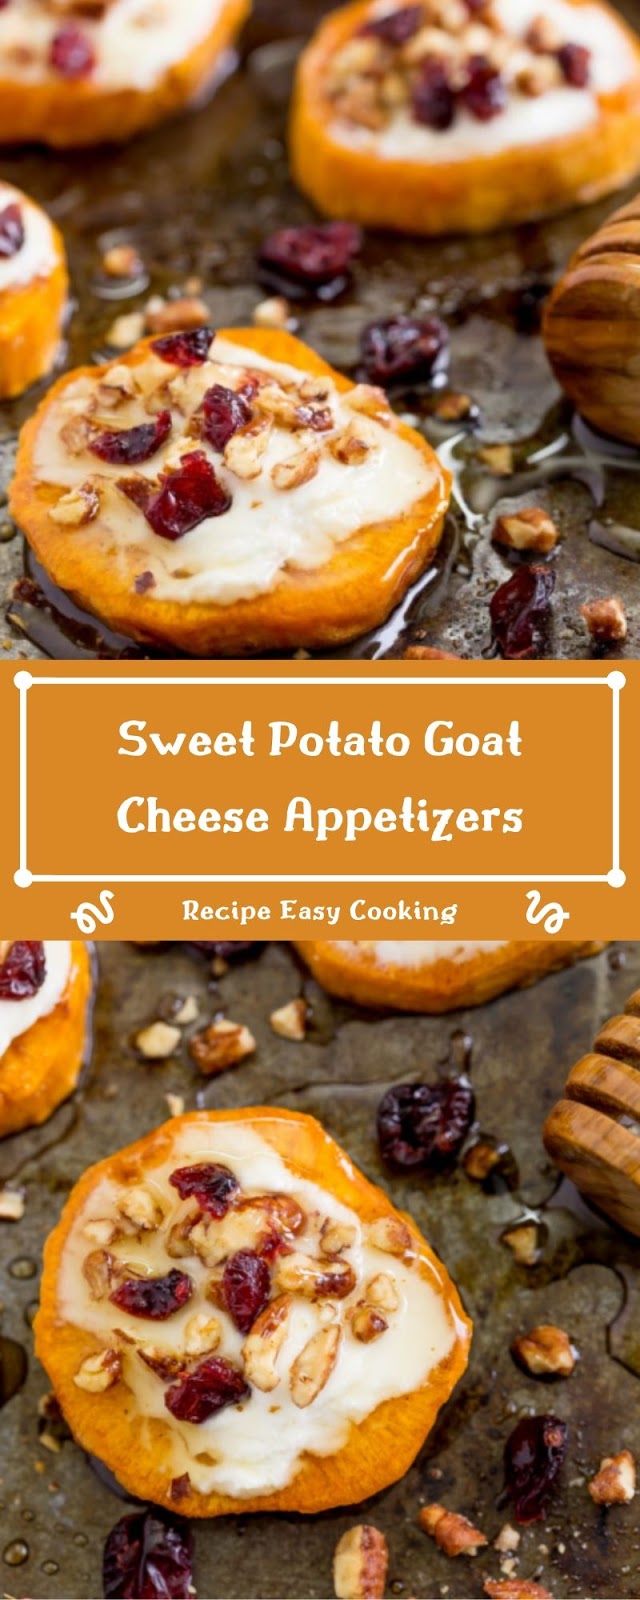 Sweet Potato Goat Cheese Appetizers